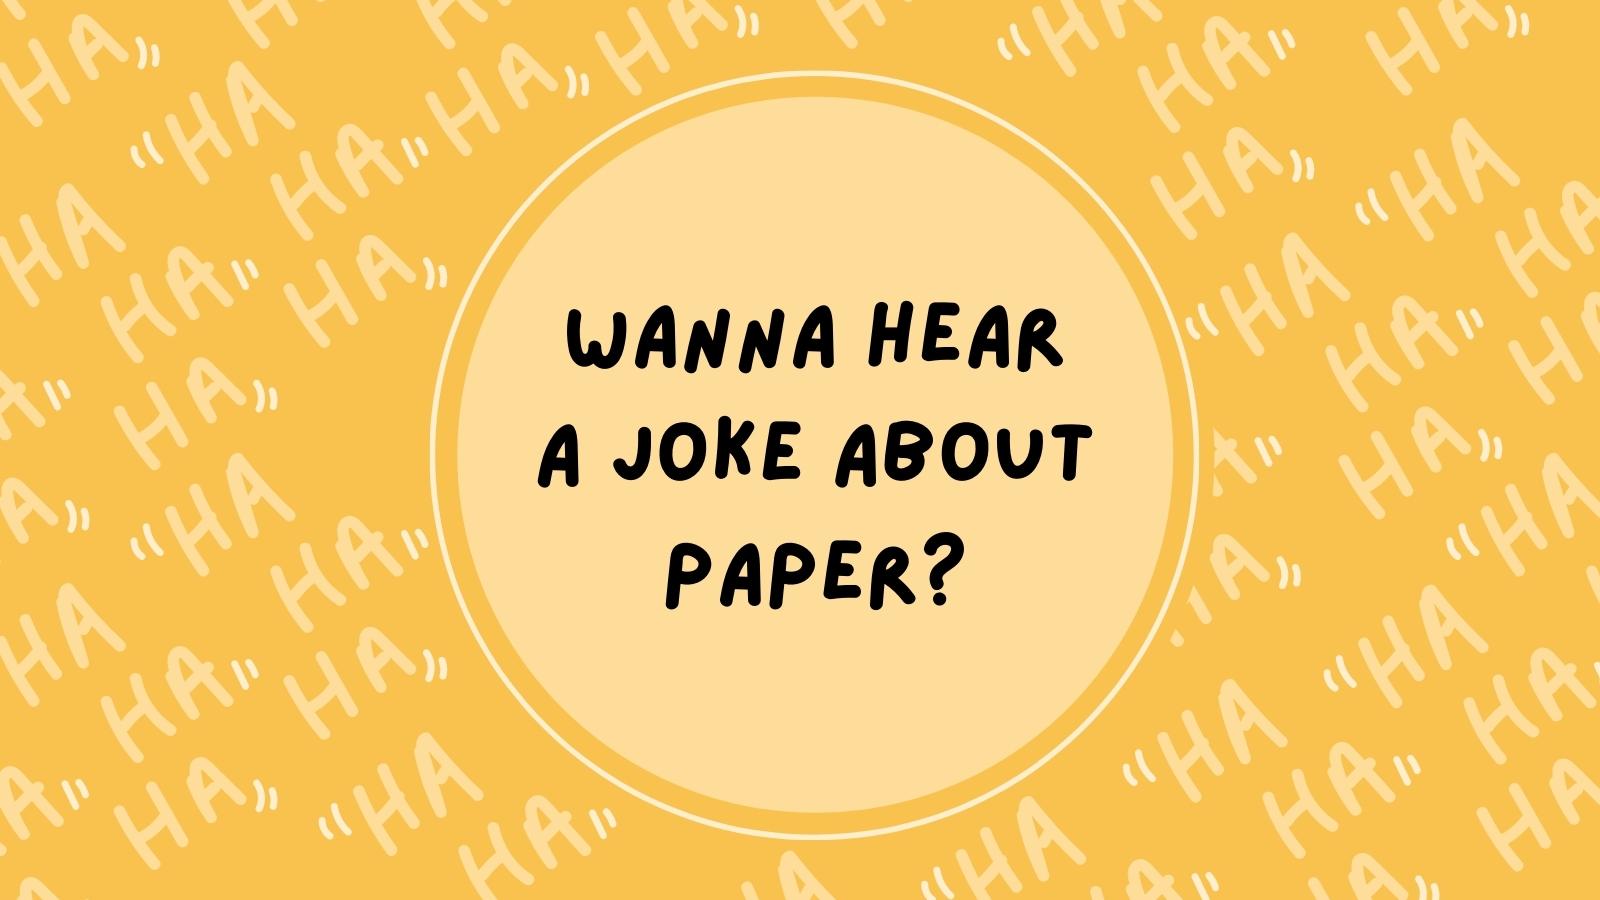 Wanna hear a joke about paper?